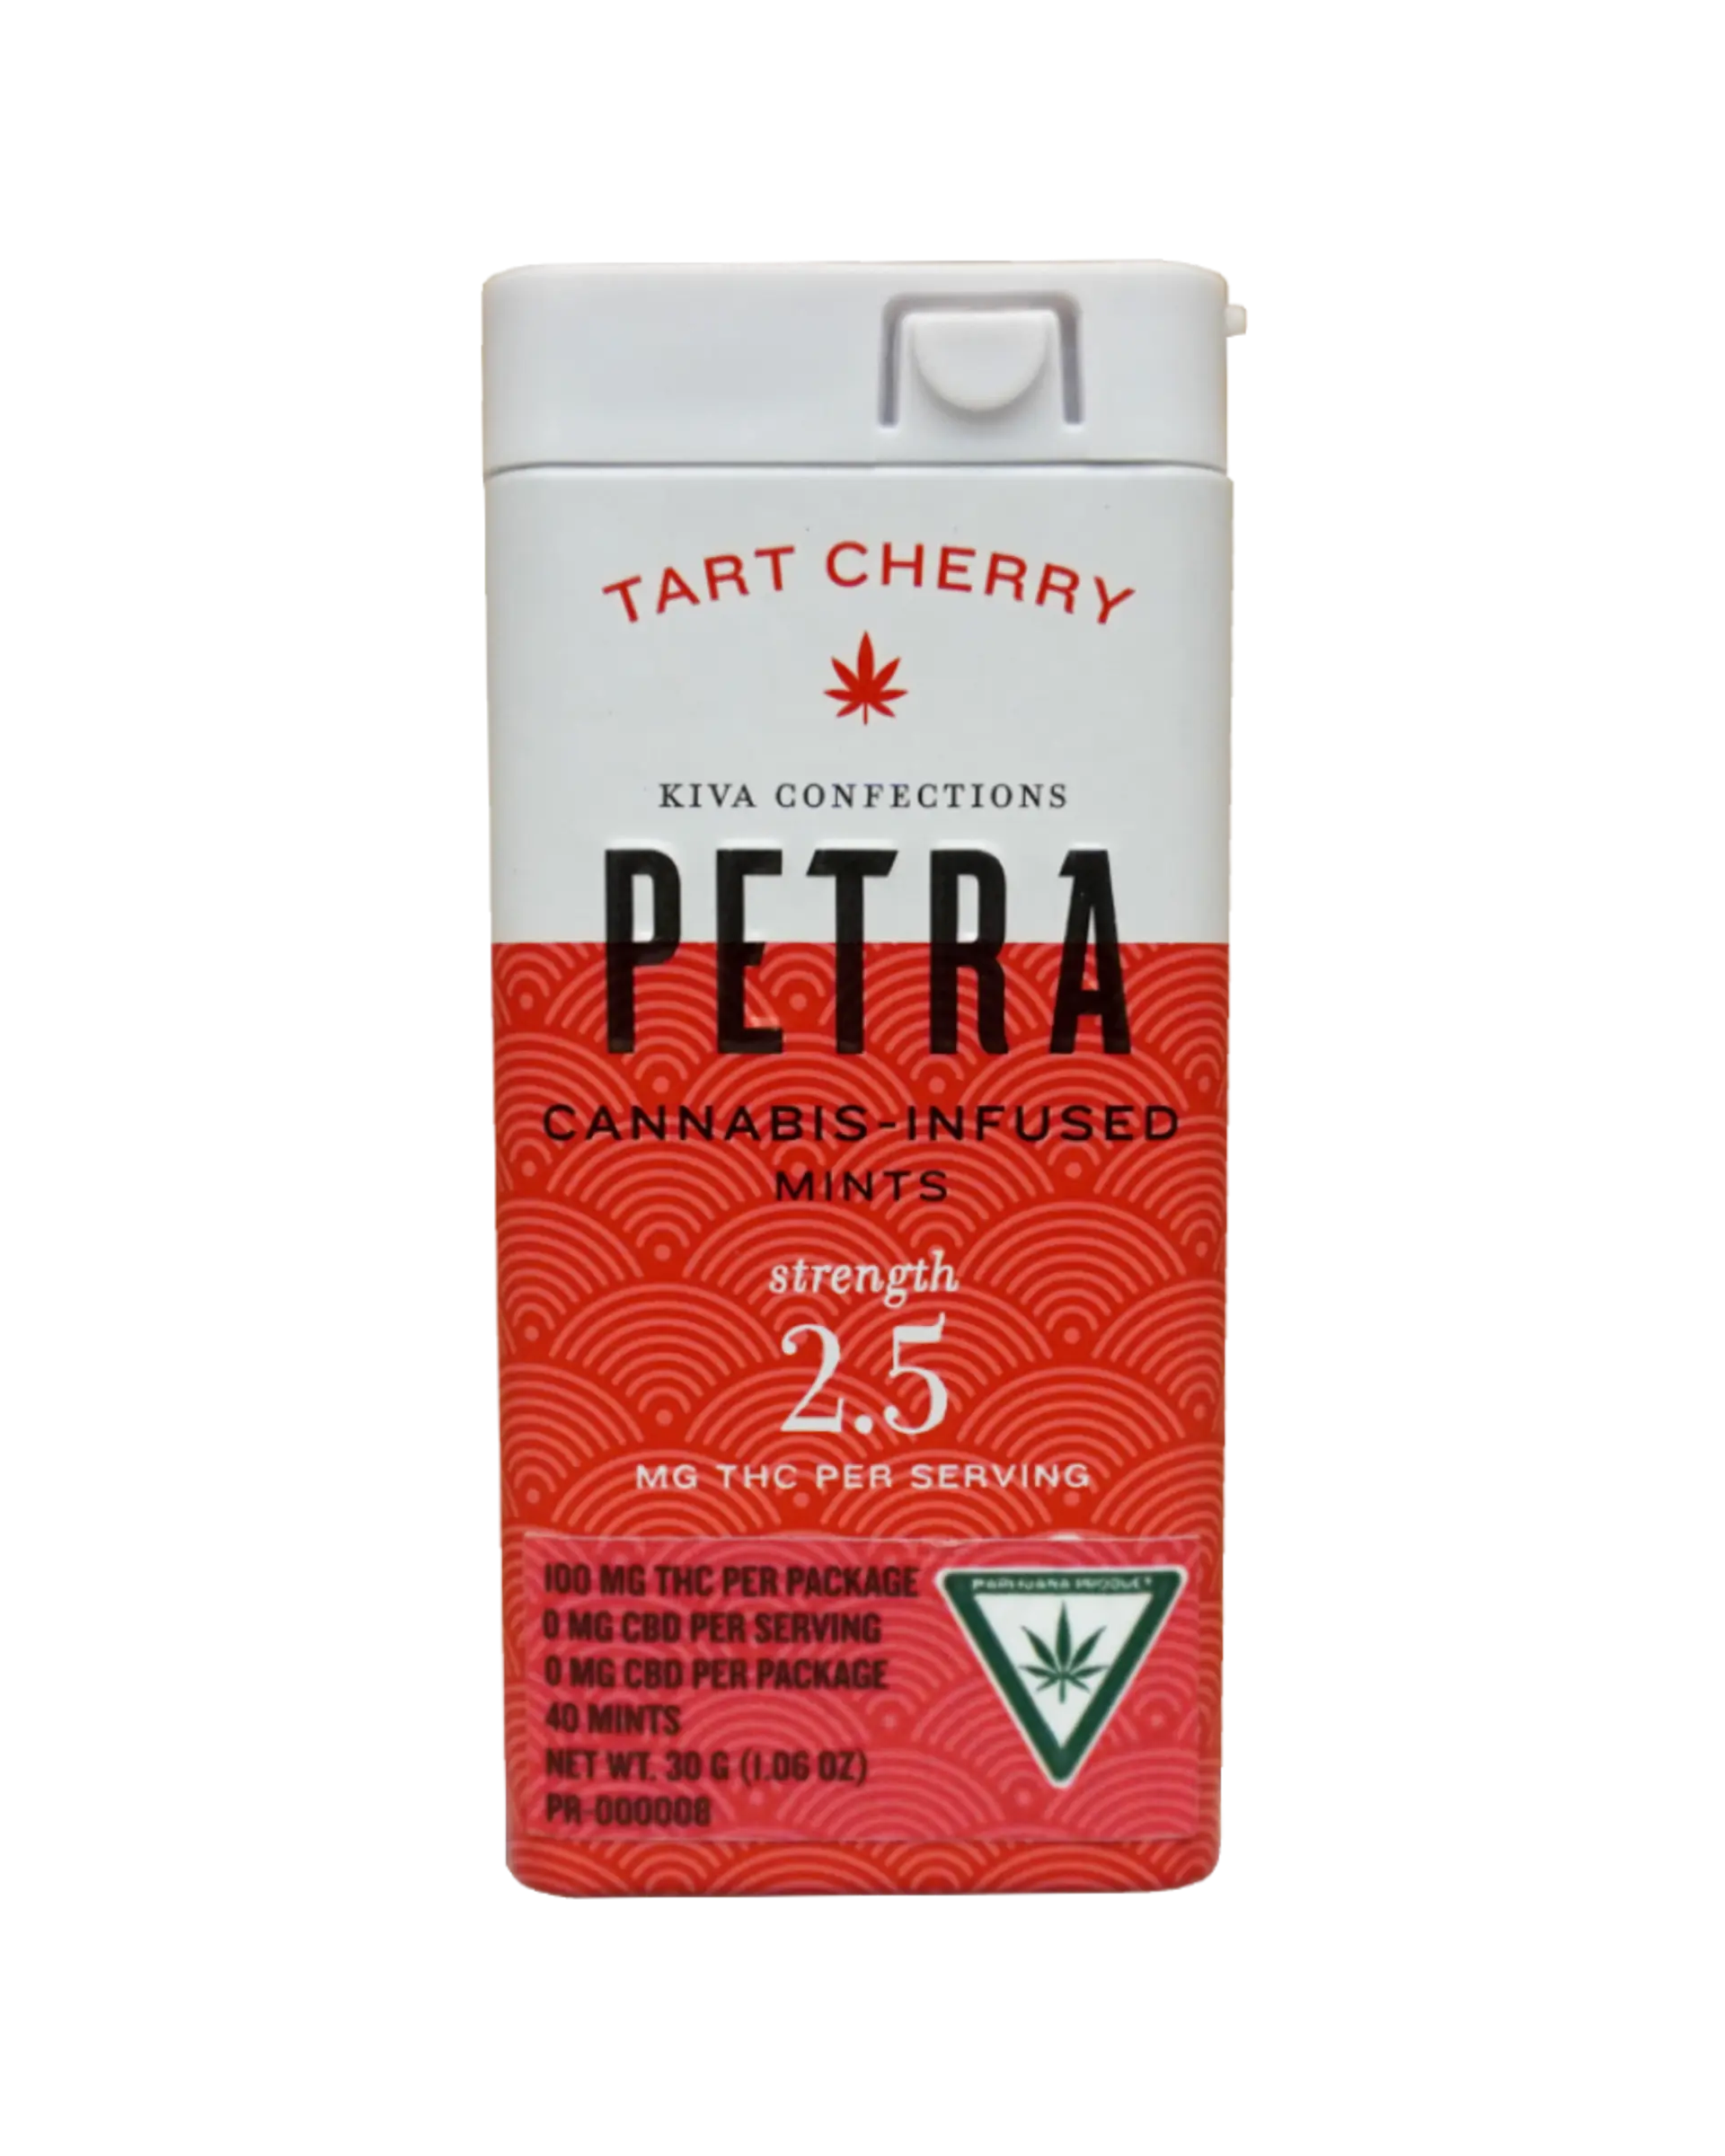 Tart Cherry Mints 40x2.5mg, 1 of 1